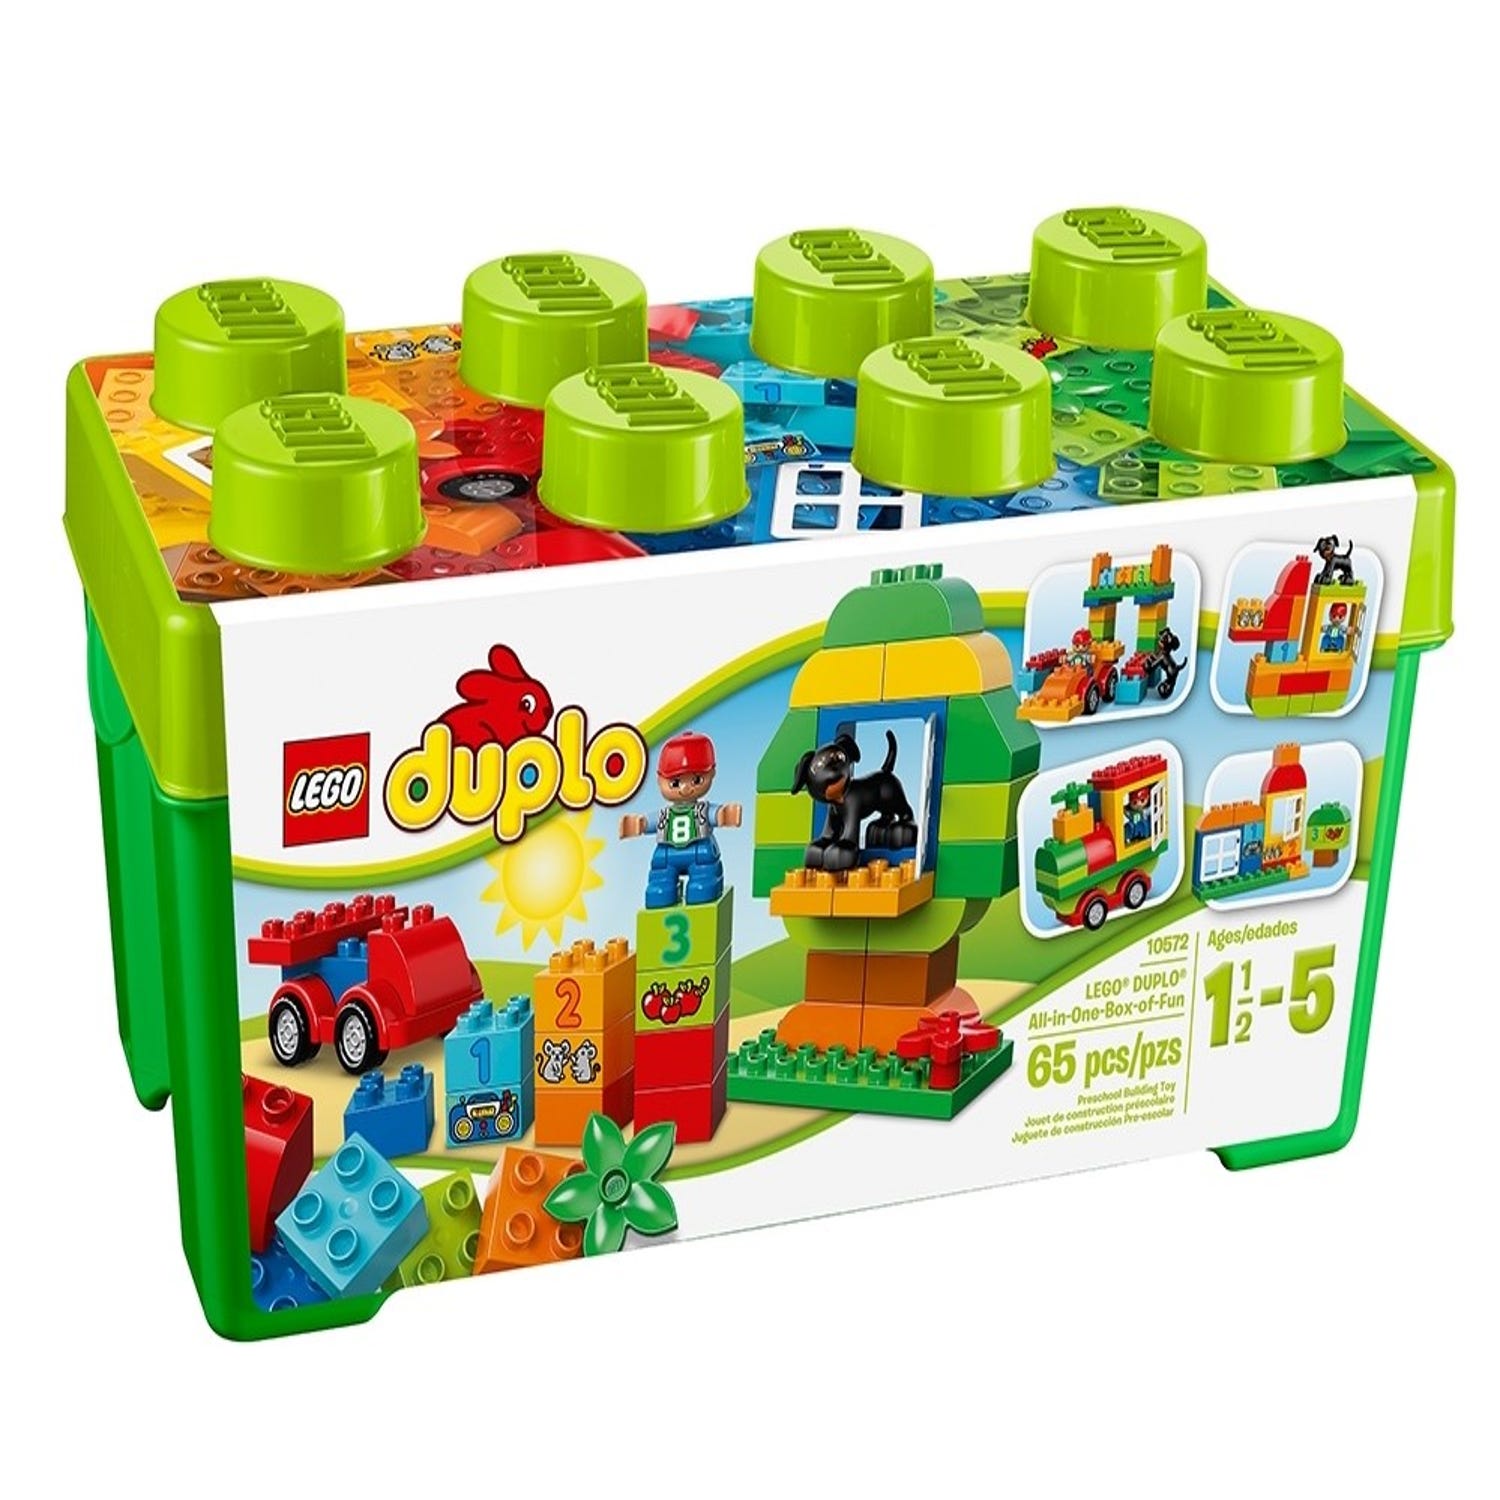 Vaarwel kunst voorspelling LEGO® DUPLO® All-in-One-Box-of-Fun 10572 | DUPLO® | Buy online at the  Official LEGO® Shop NL